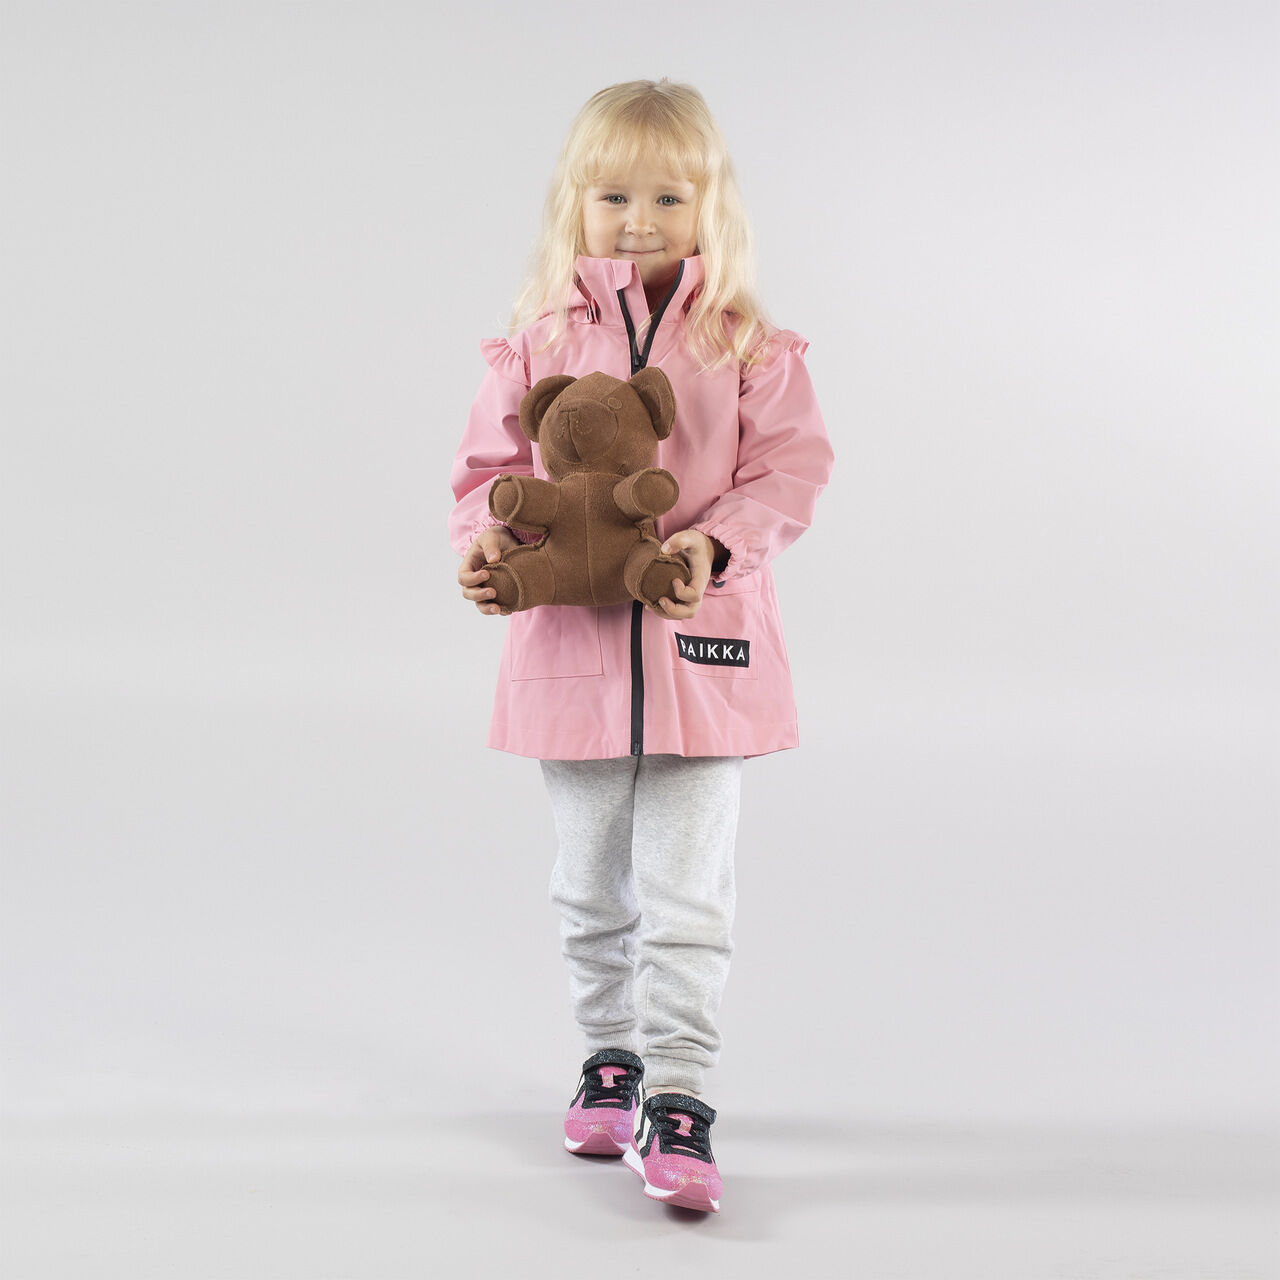 PAIKKA-Teddy-toy-Teddybaer-Hundespielzeug8-60-46382